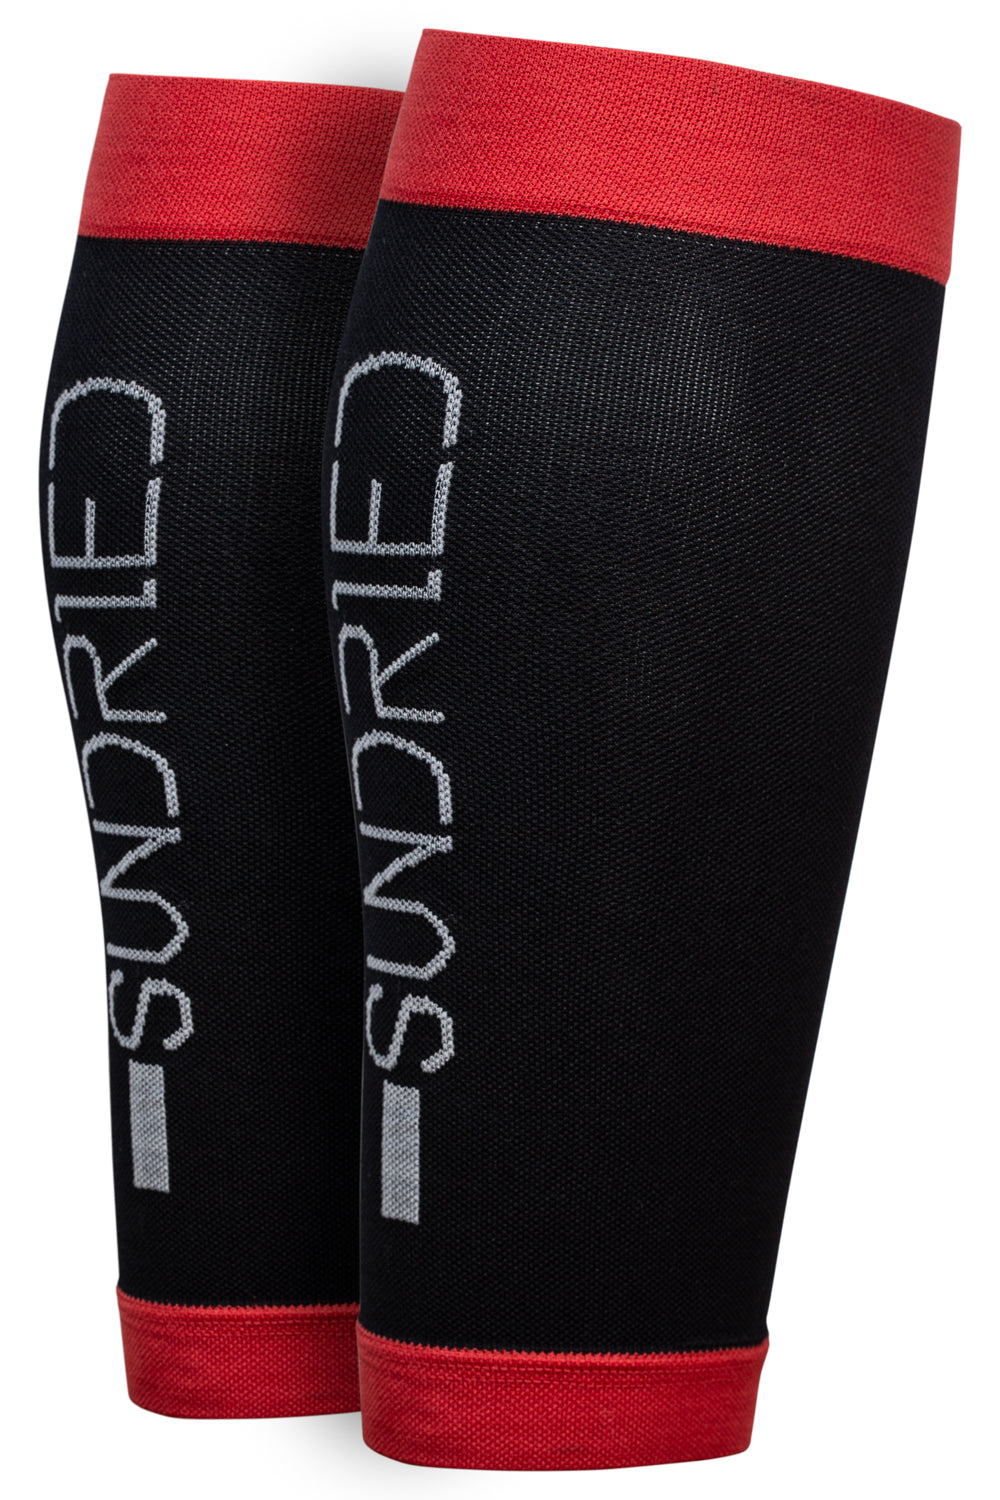 Sundried Compression Calf Sleeve Running Socks S Black SD0438 S Black Activewear